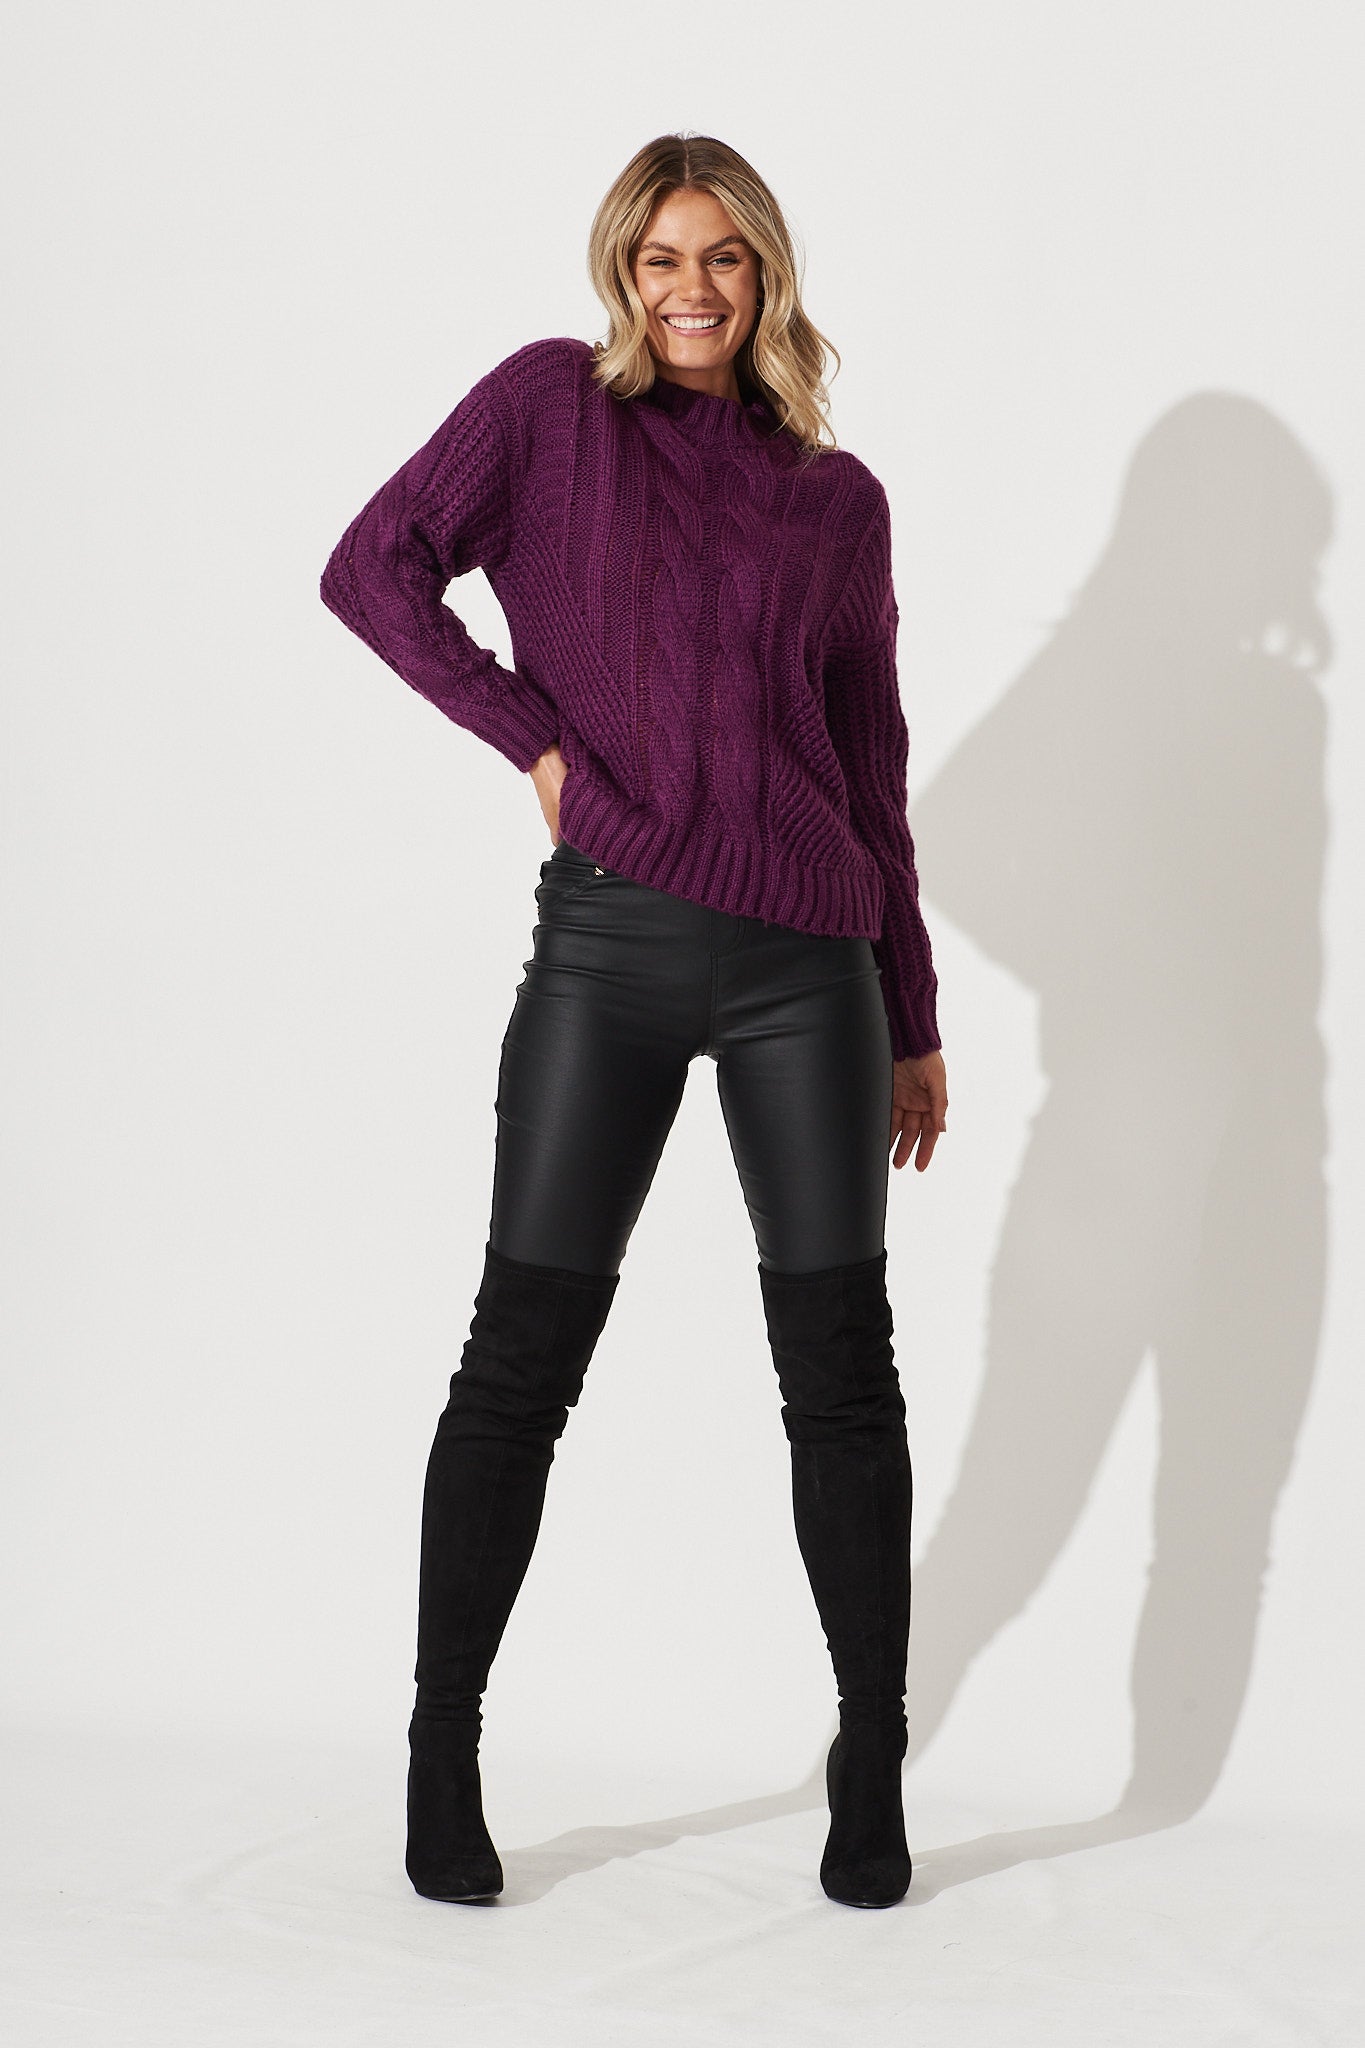 Notting Knit In Dark Purple Cotton Blend - full length